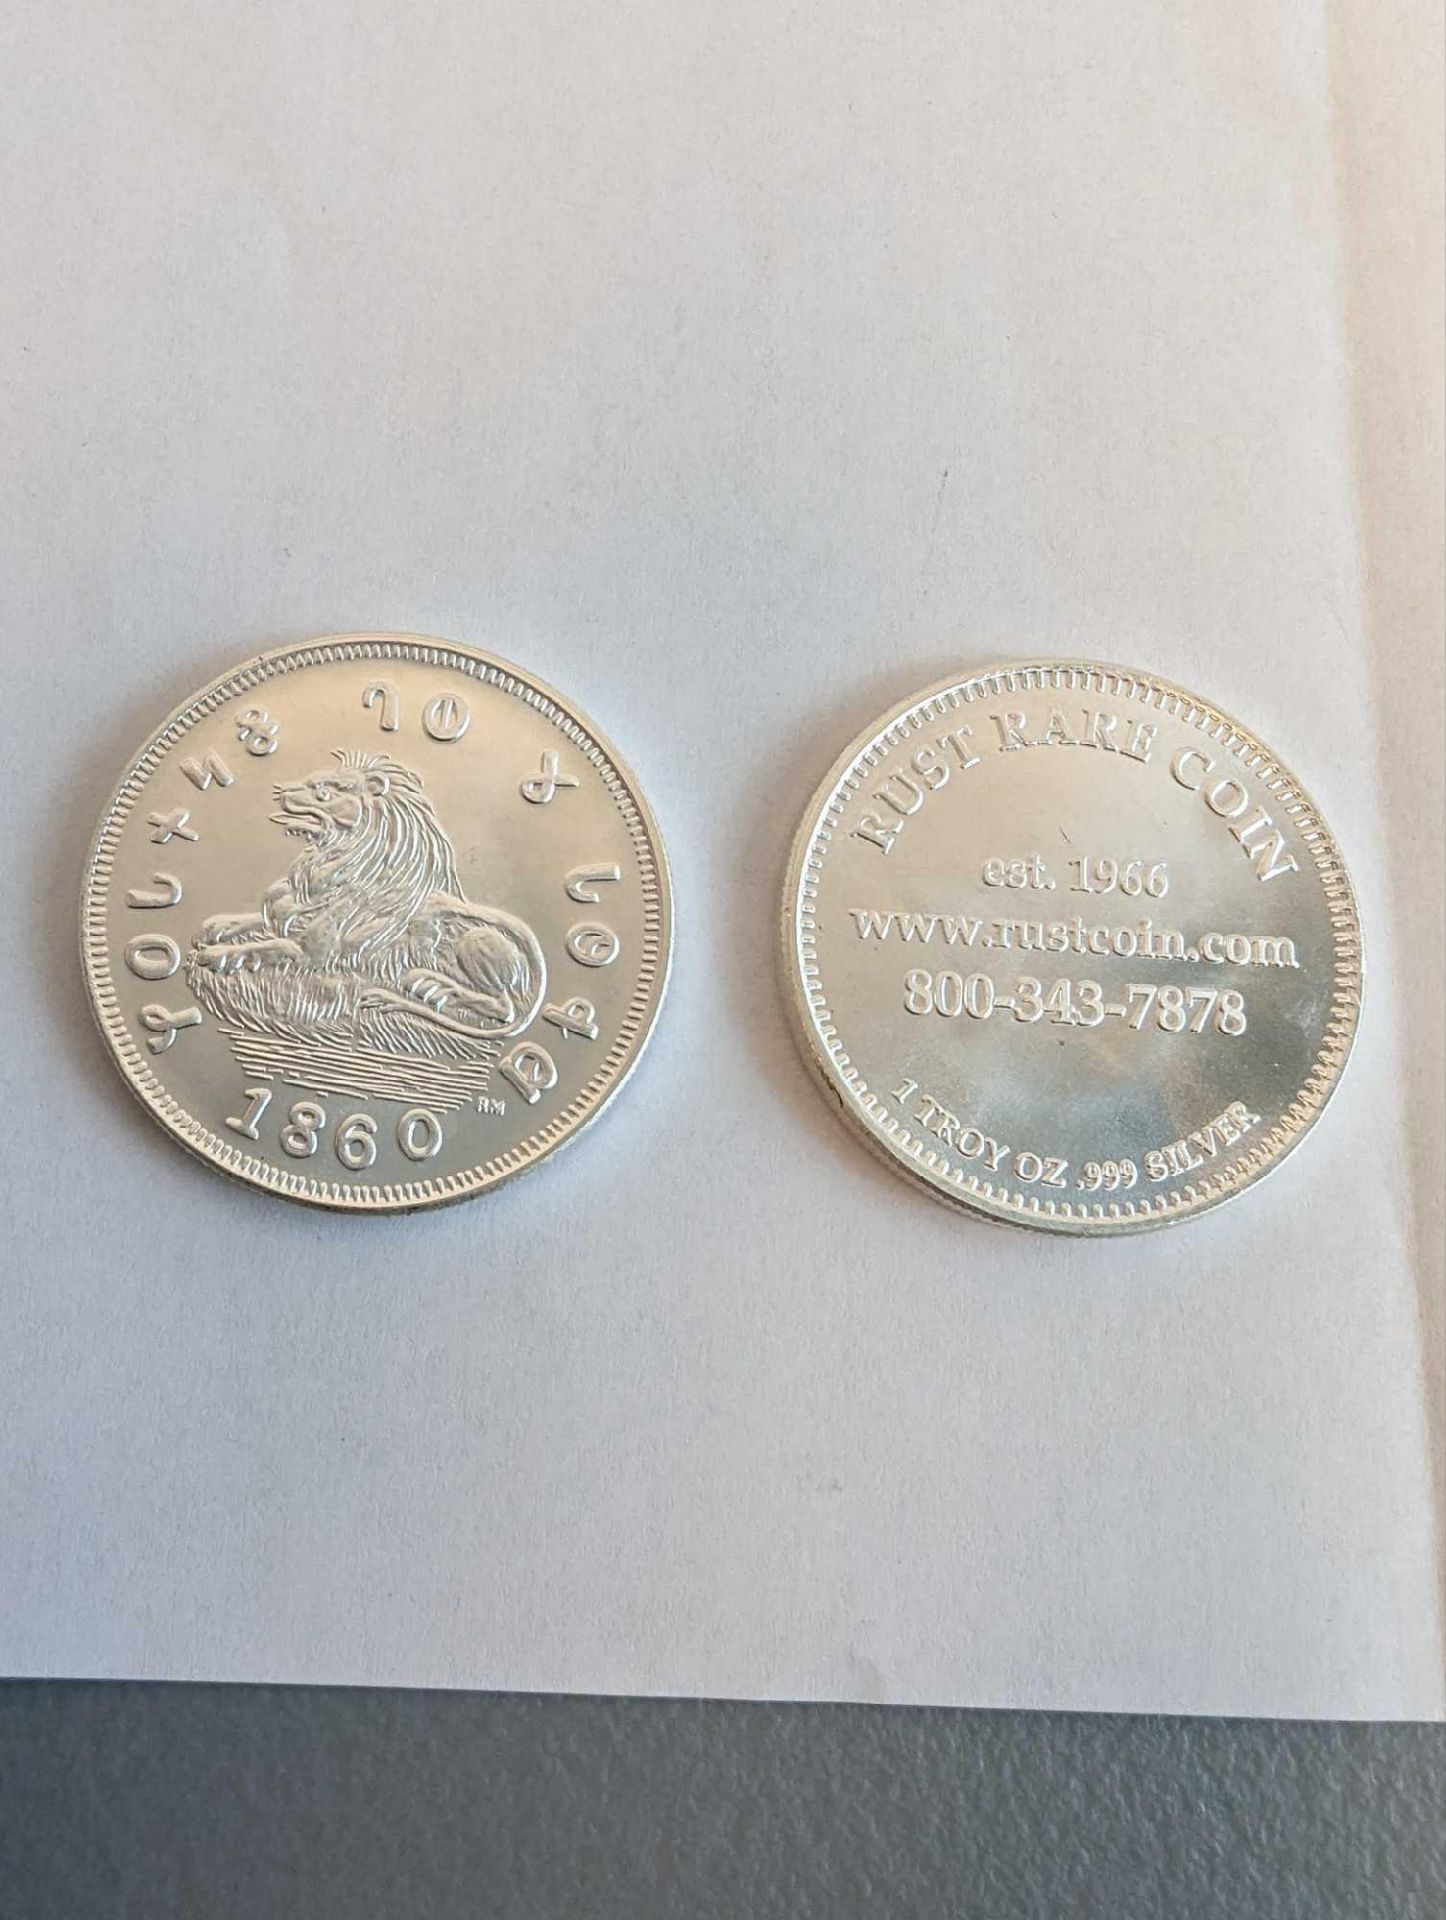 2 silver coins. Rust coin